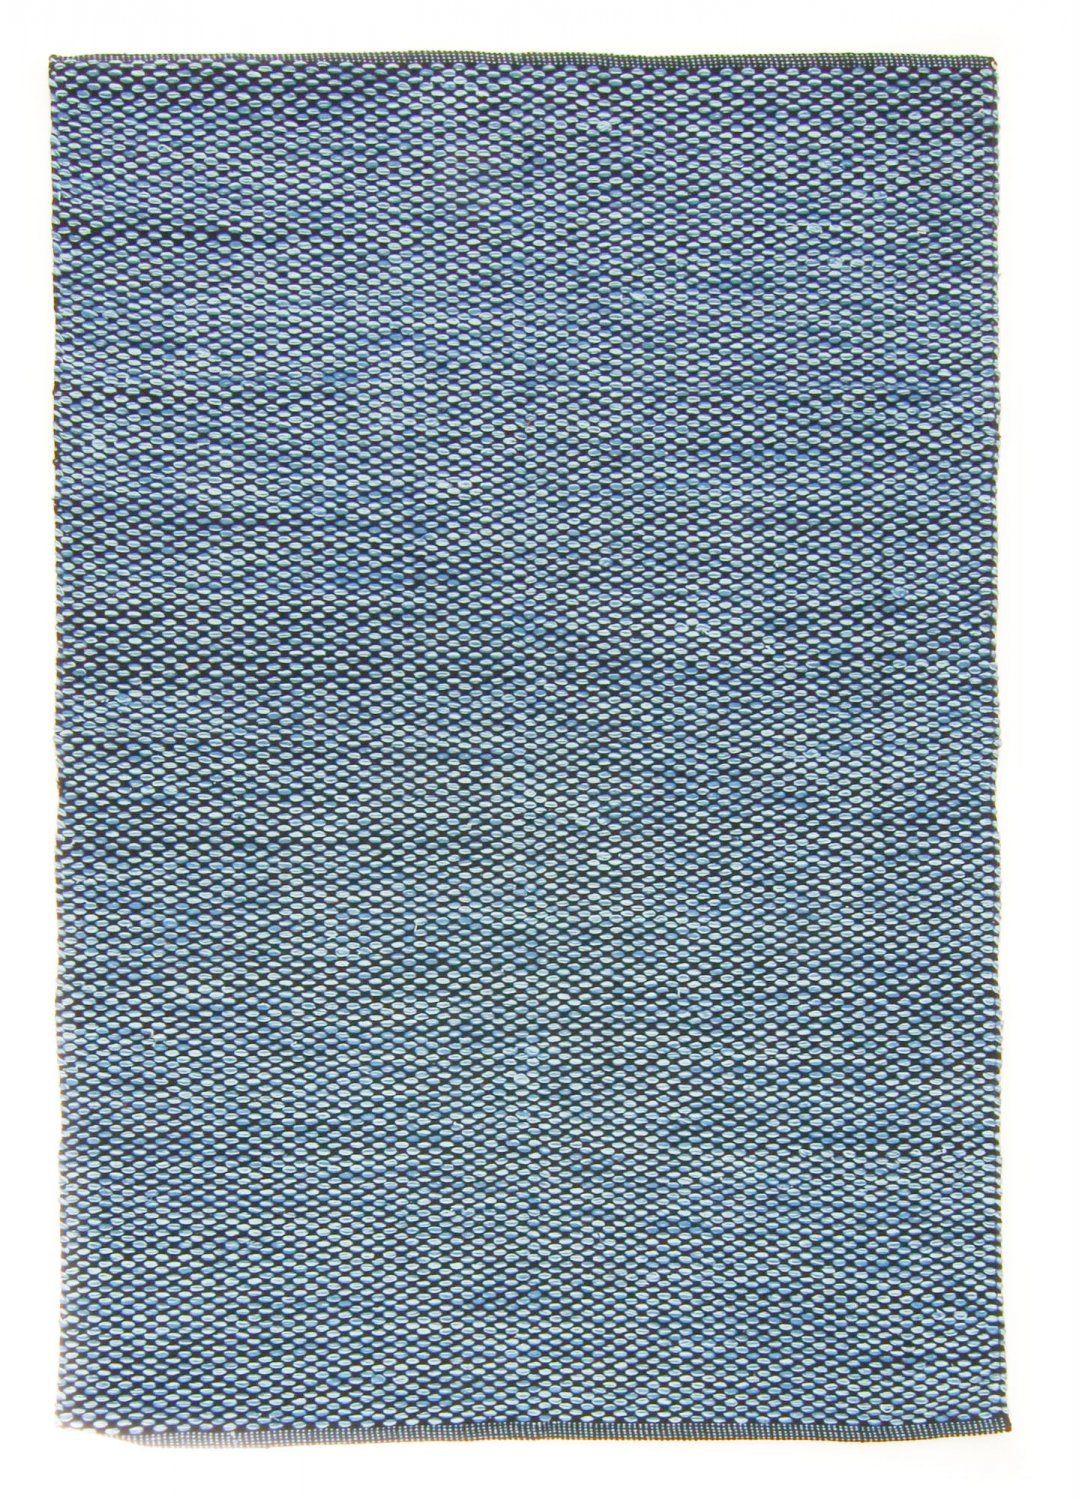 Voddenkleed - Tuva (blauw)